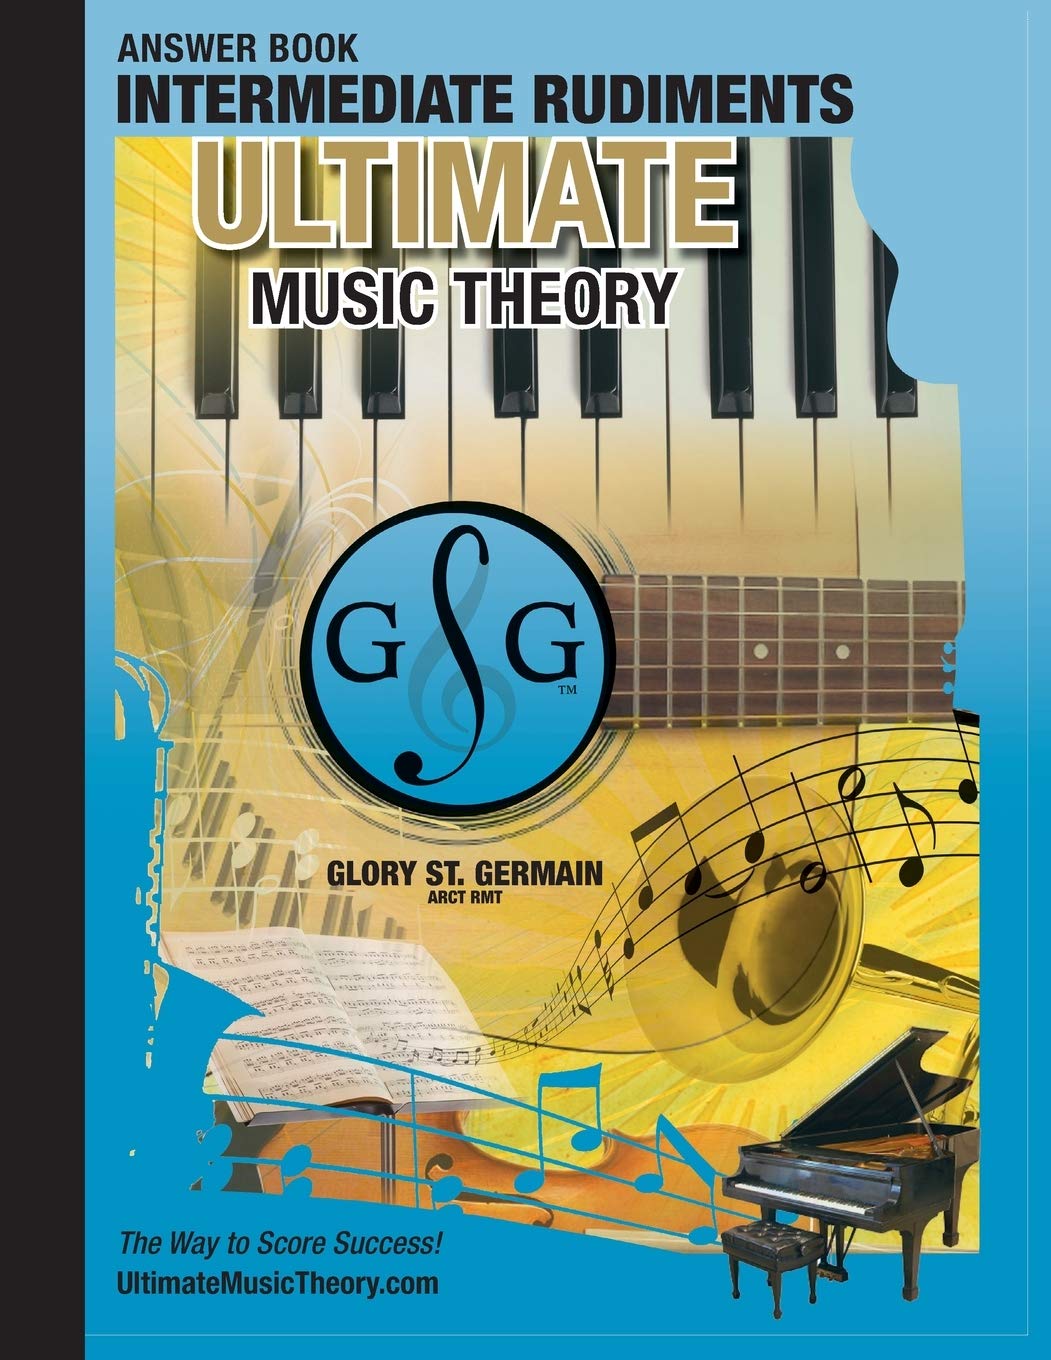 Ultimate Music Theory - Intermediate Rudiments, Answer Book